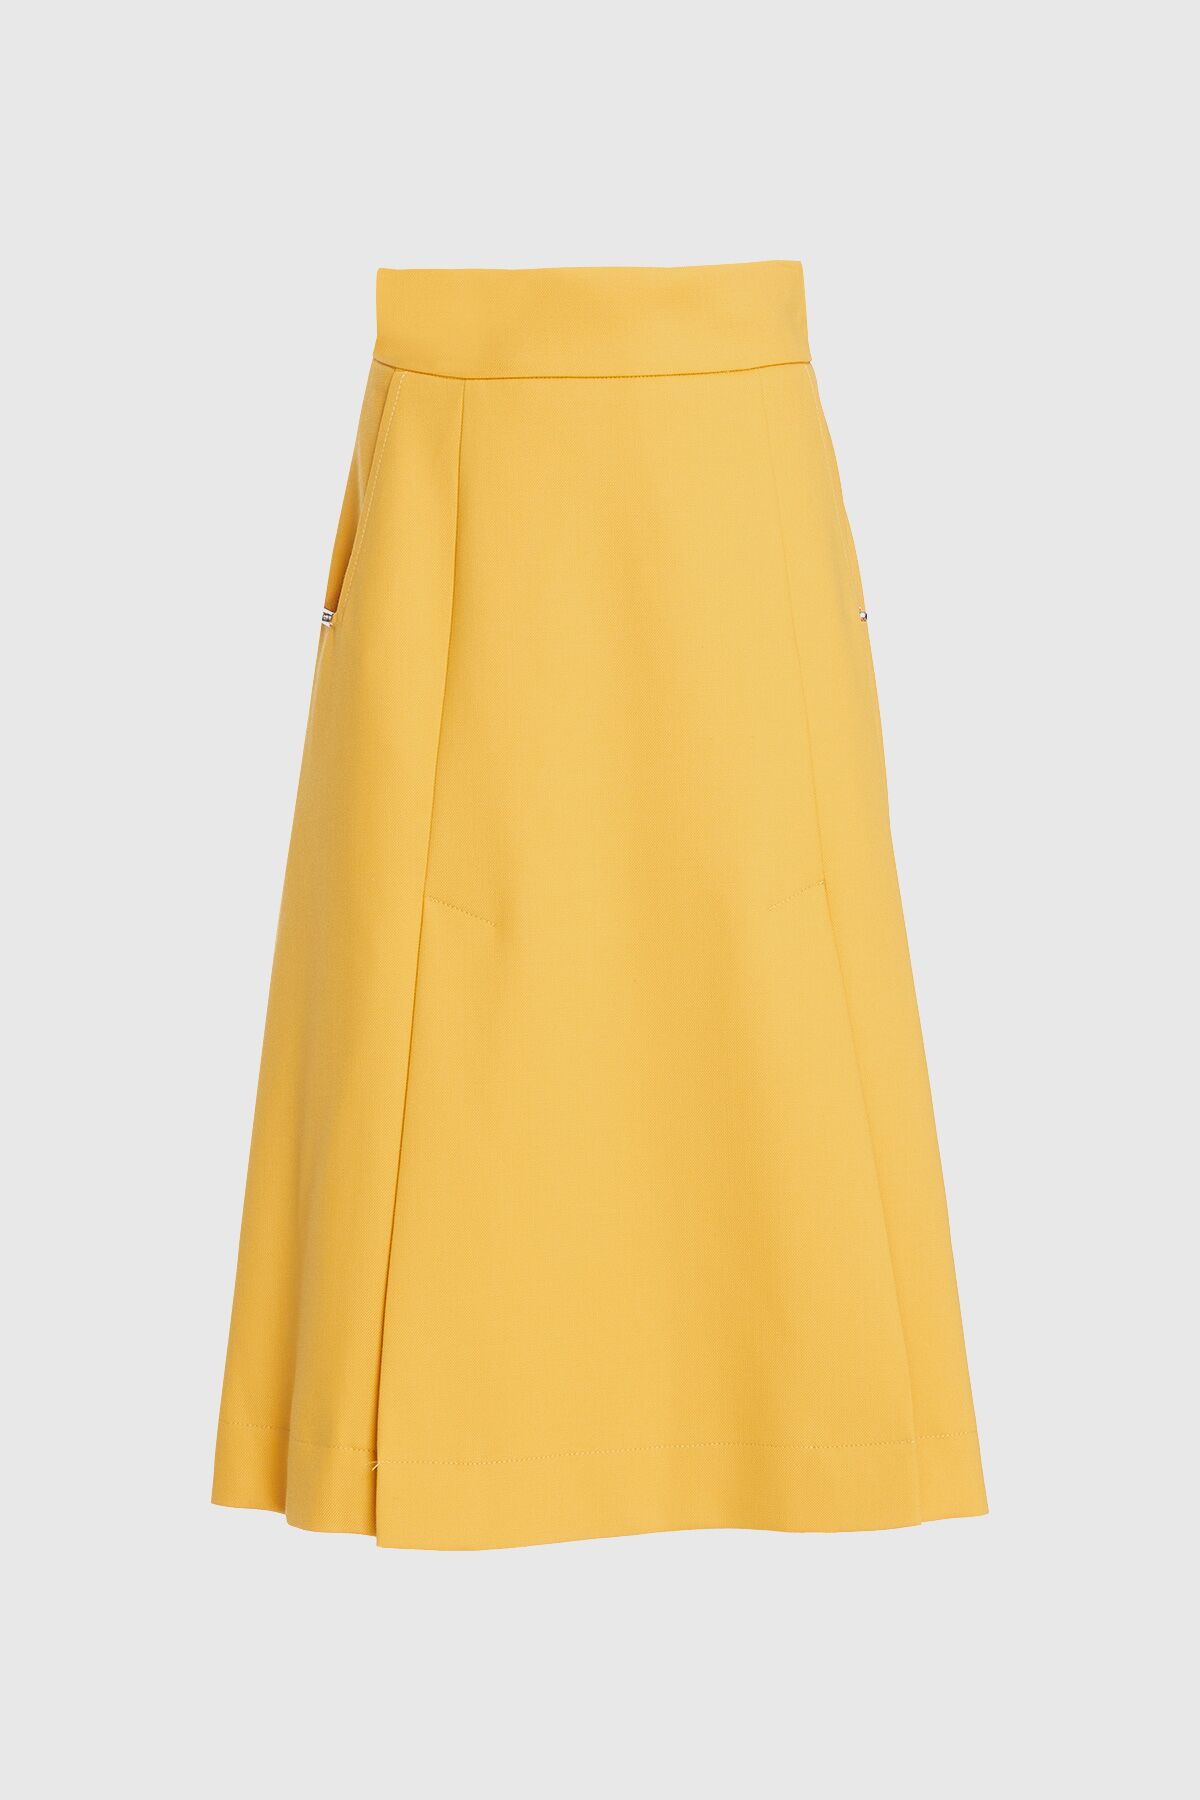  GIZIA - A Form Knee Length Yellow Skirt